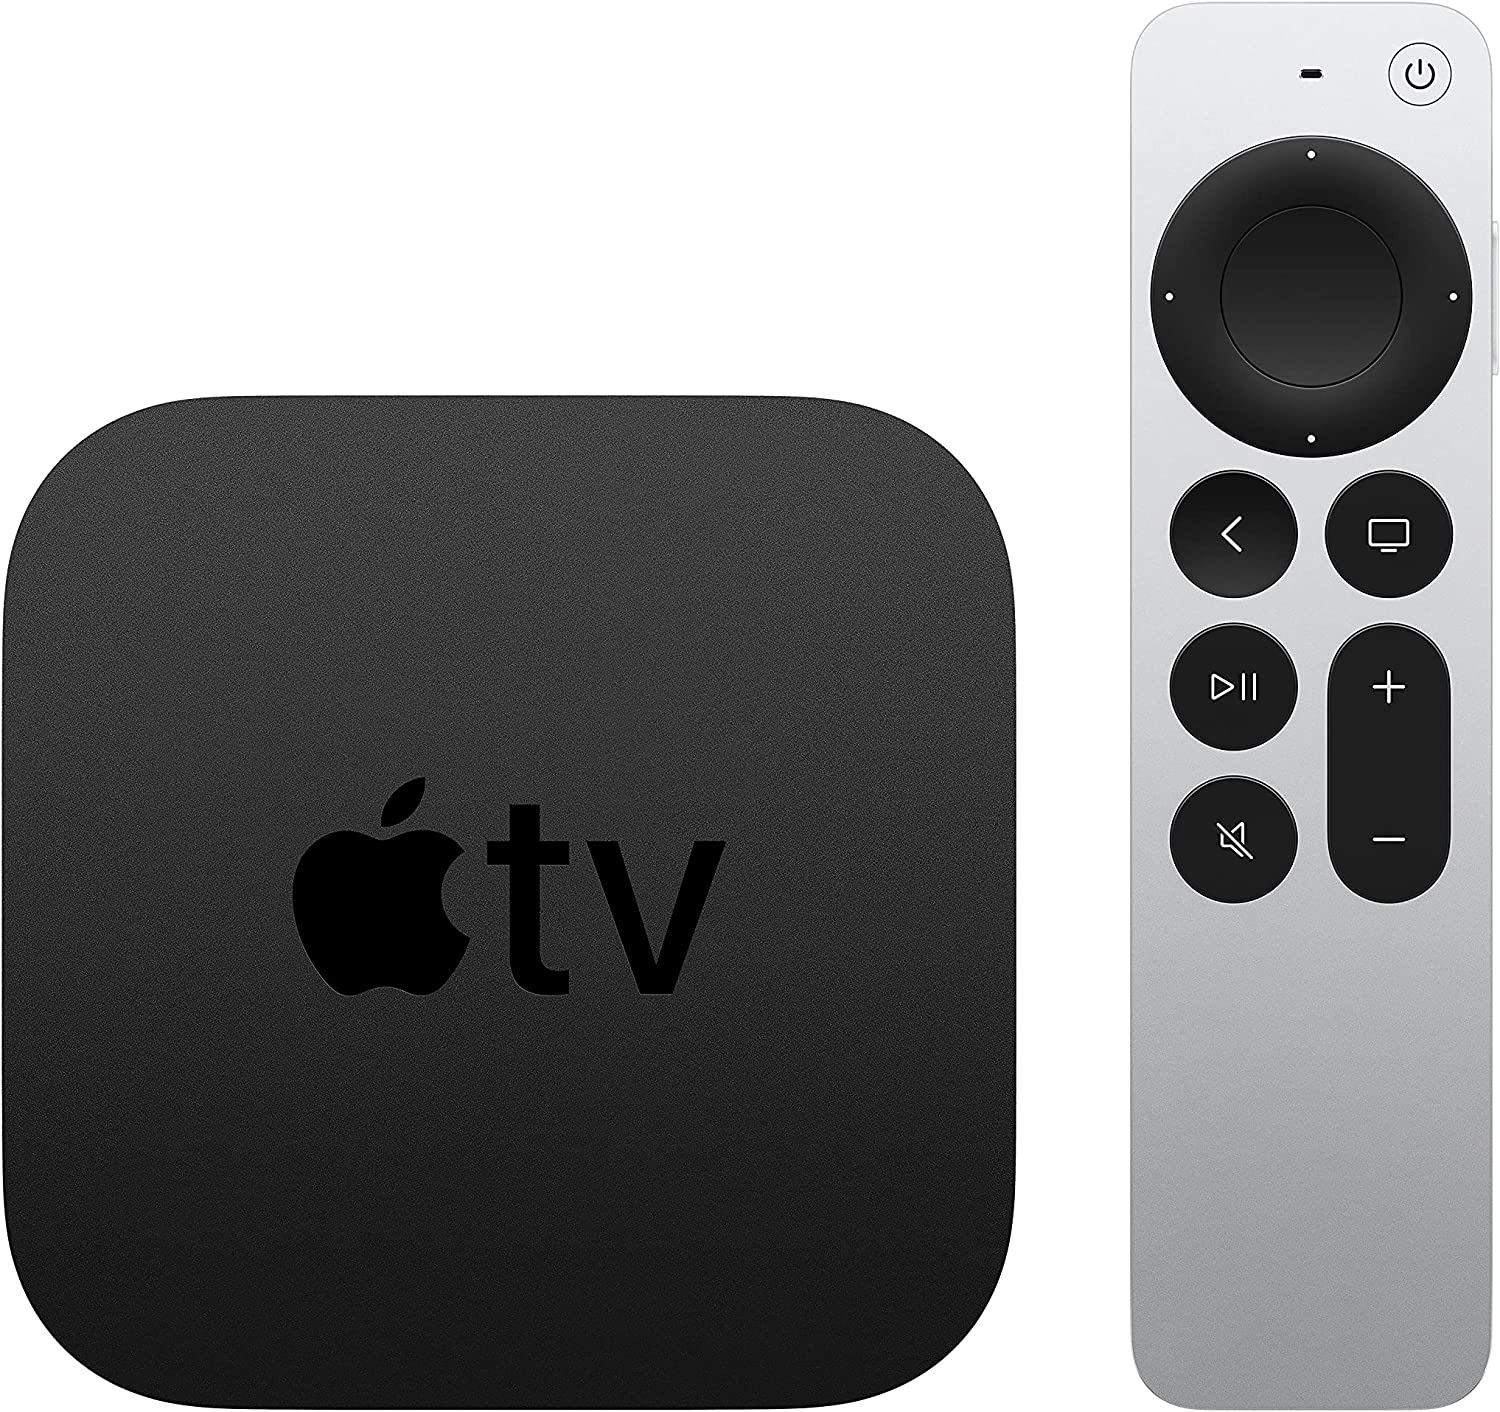 2021 Apple TV 4K with 32GB Storage (2nd Generation) - $79.99